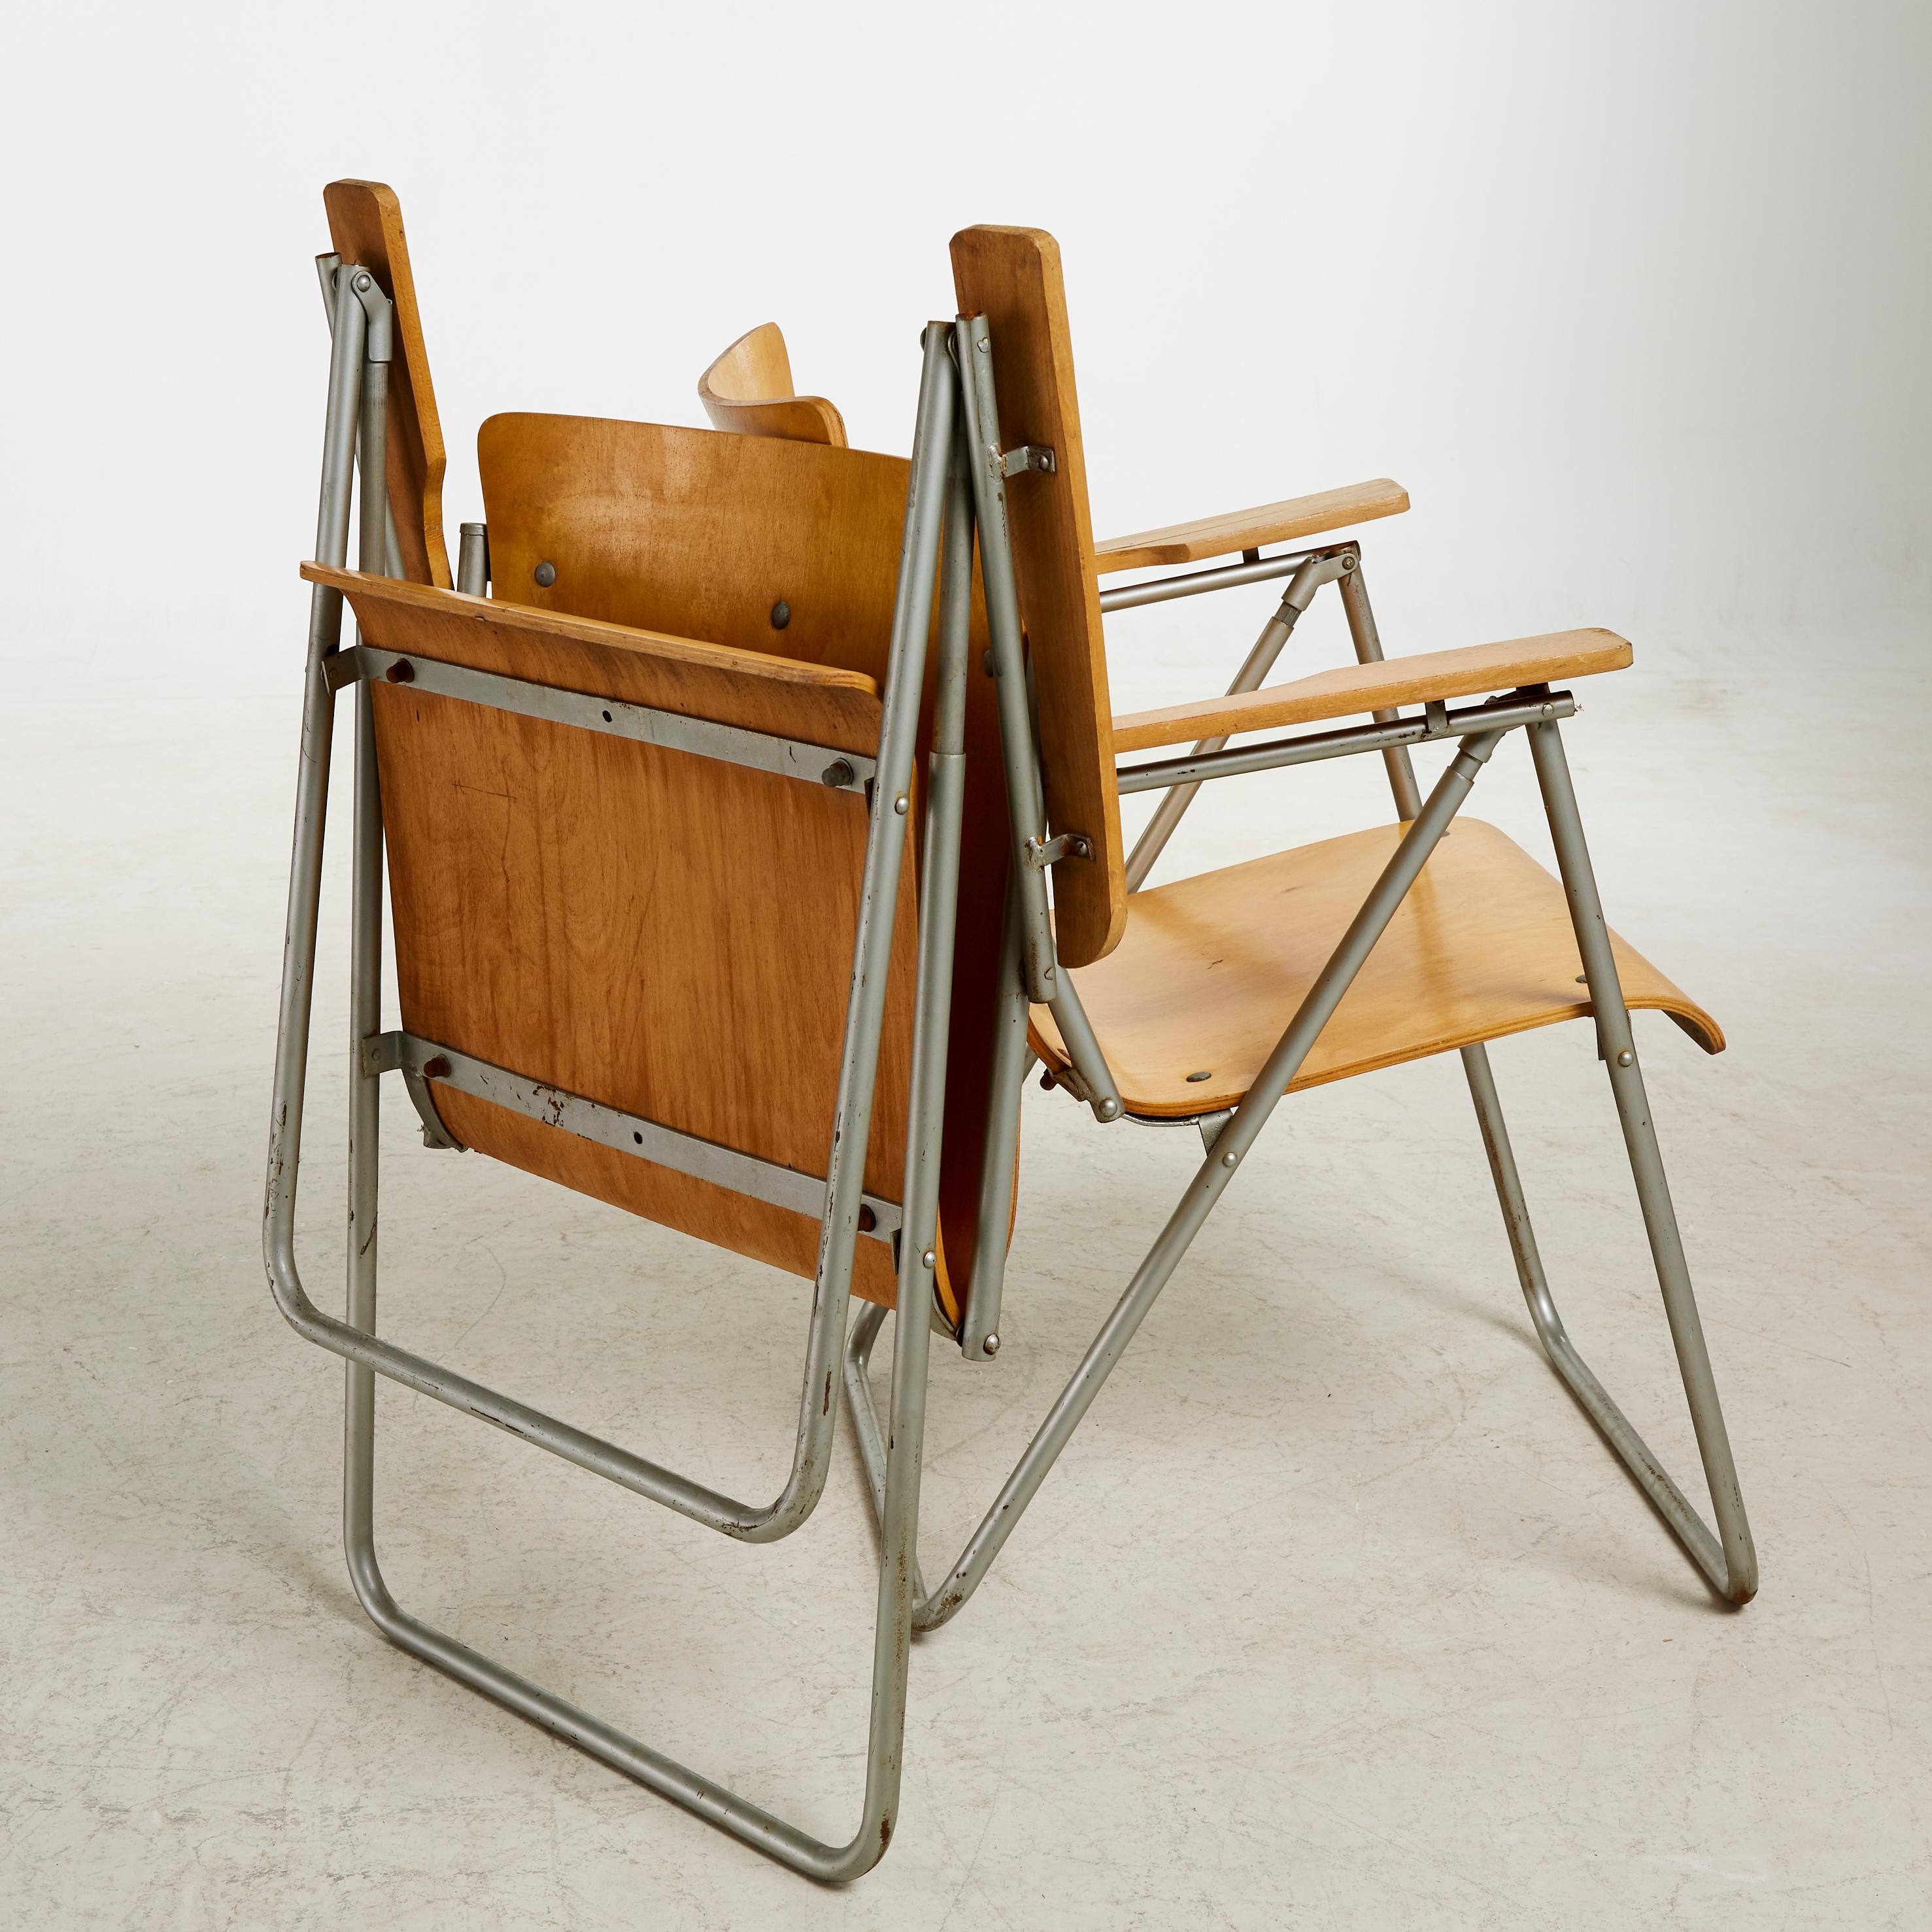 Scandinavian Modern Scandinavian Pair of Folding Chairs in Molded Birch Wood, 1940s For Sale